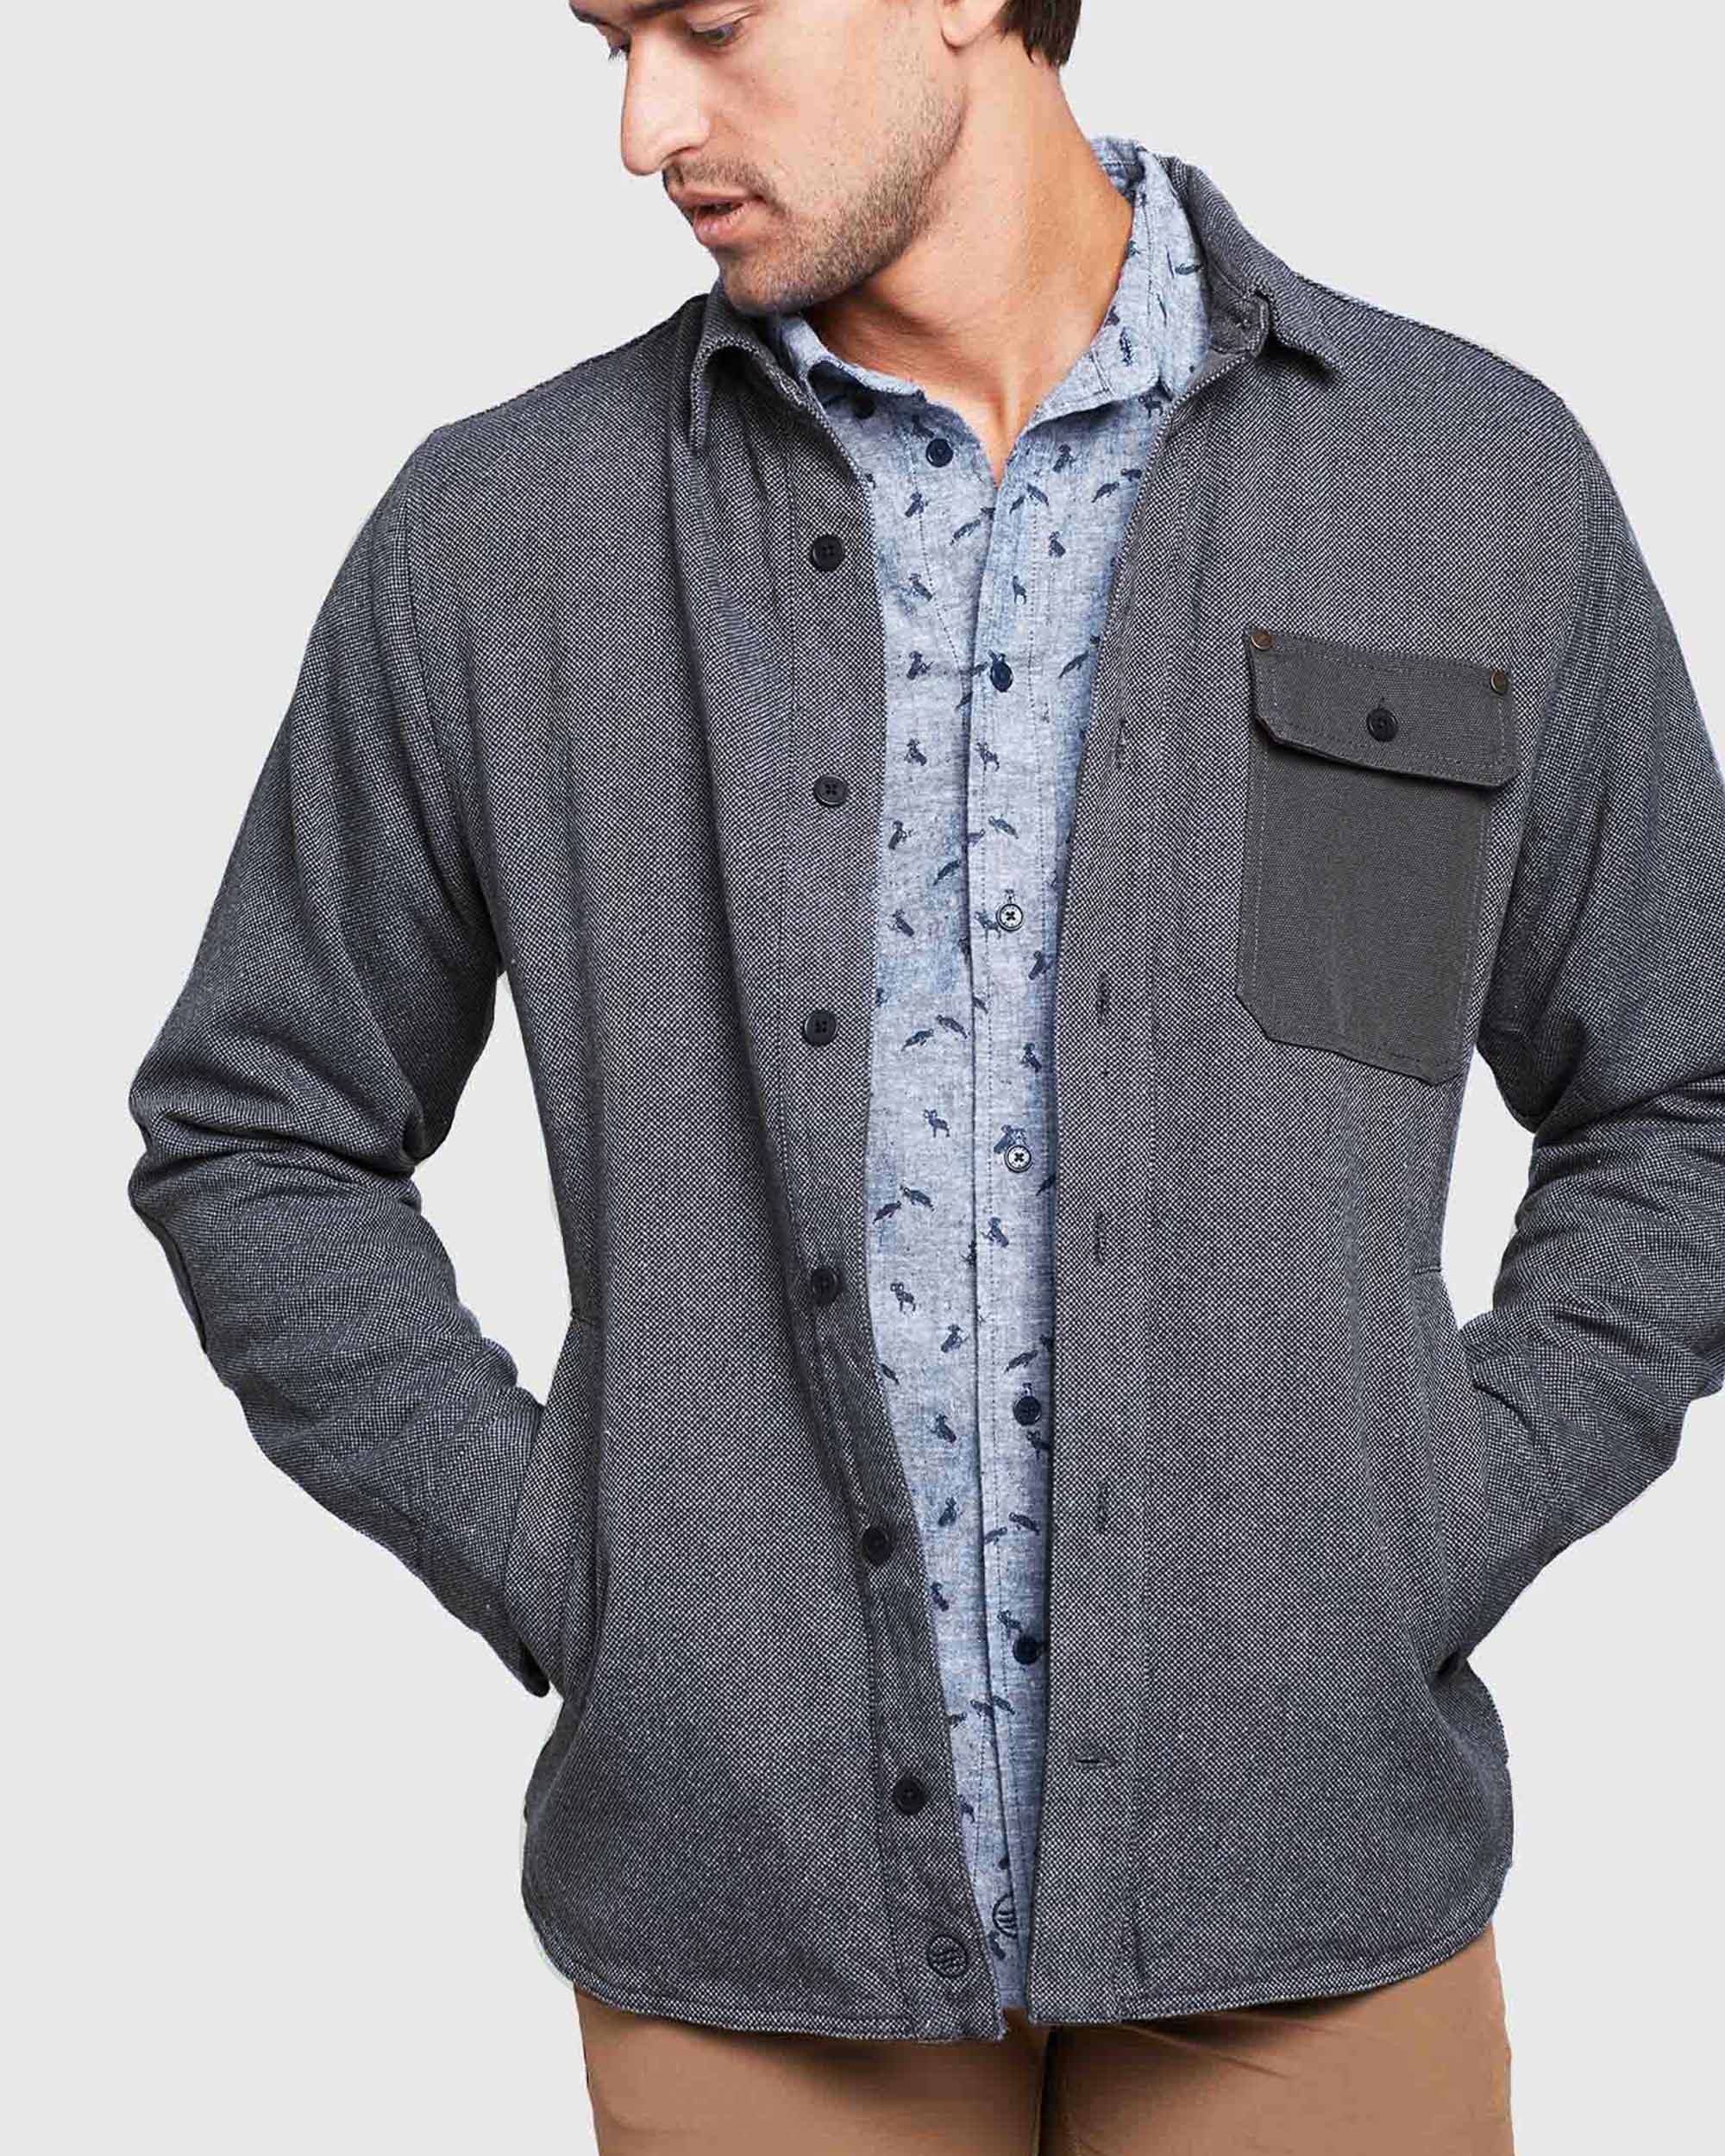 Flannel-Lined Salvaged Hemp Shirt Jacket